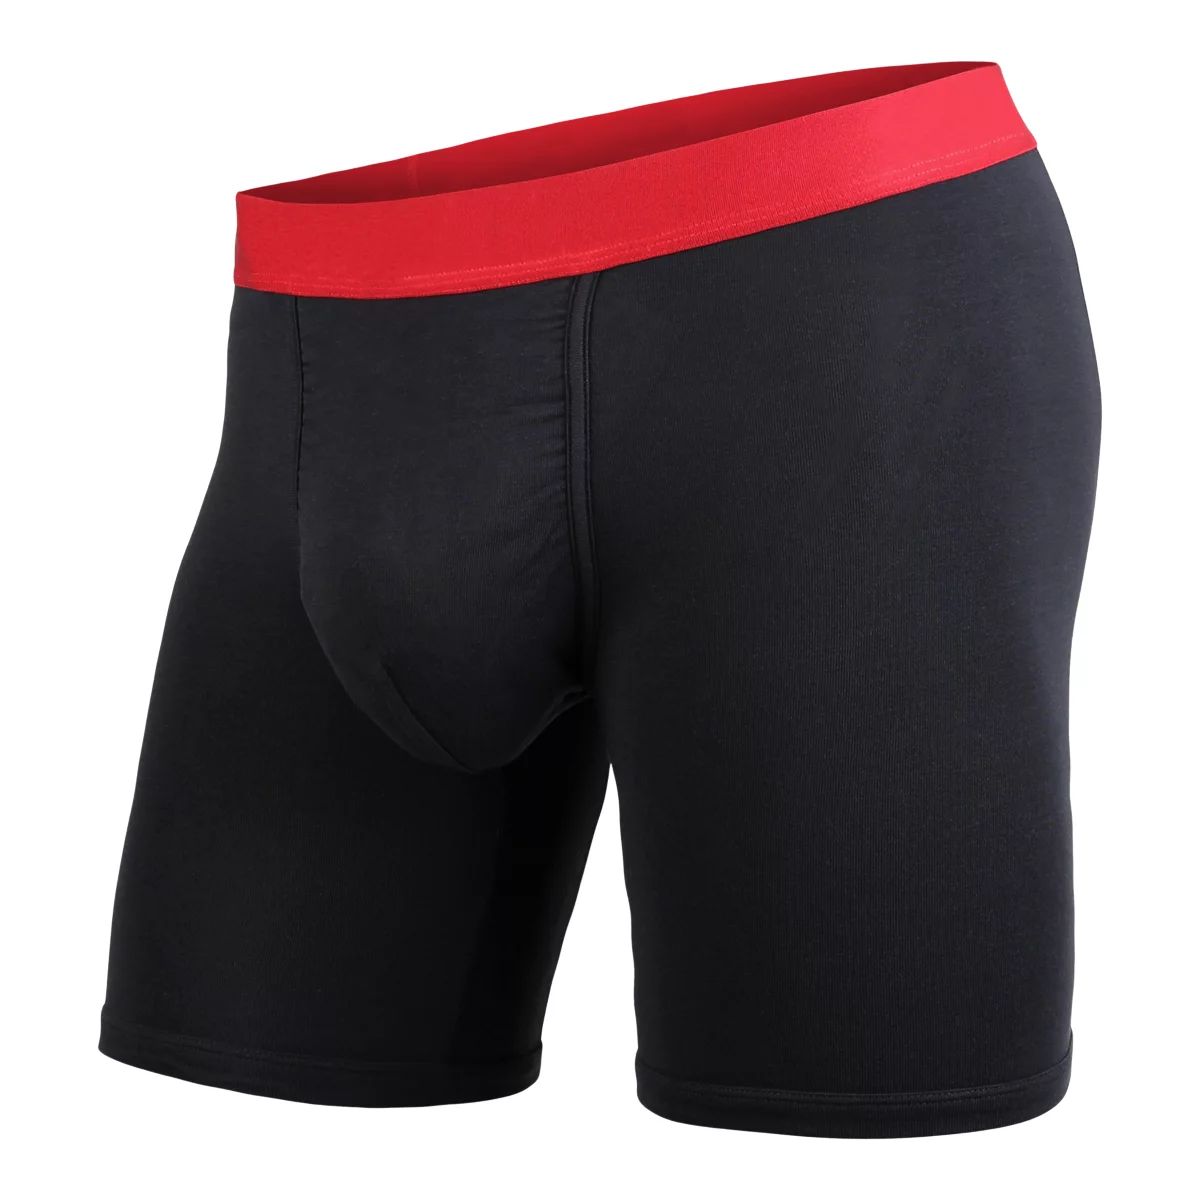 BN3TH Classic Lite Men's Boxer Brief, Underwear, Breathable, Slim Fit